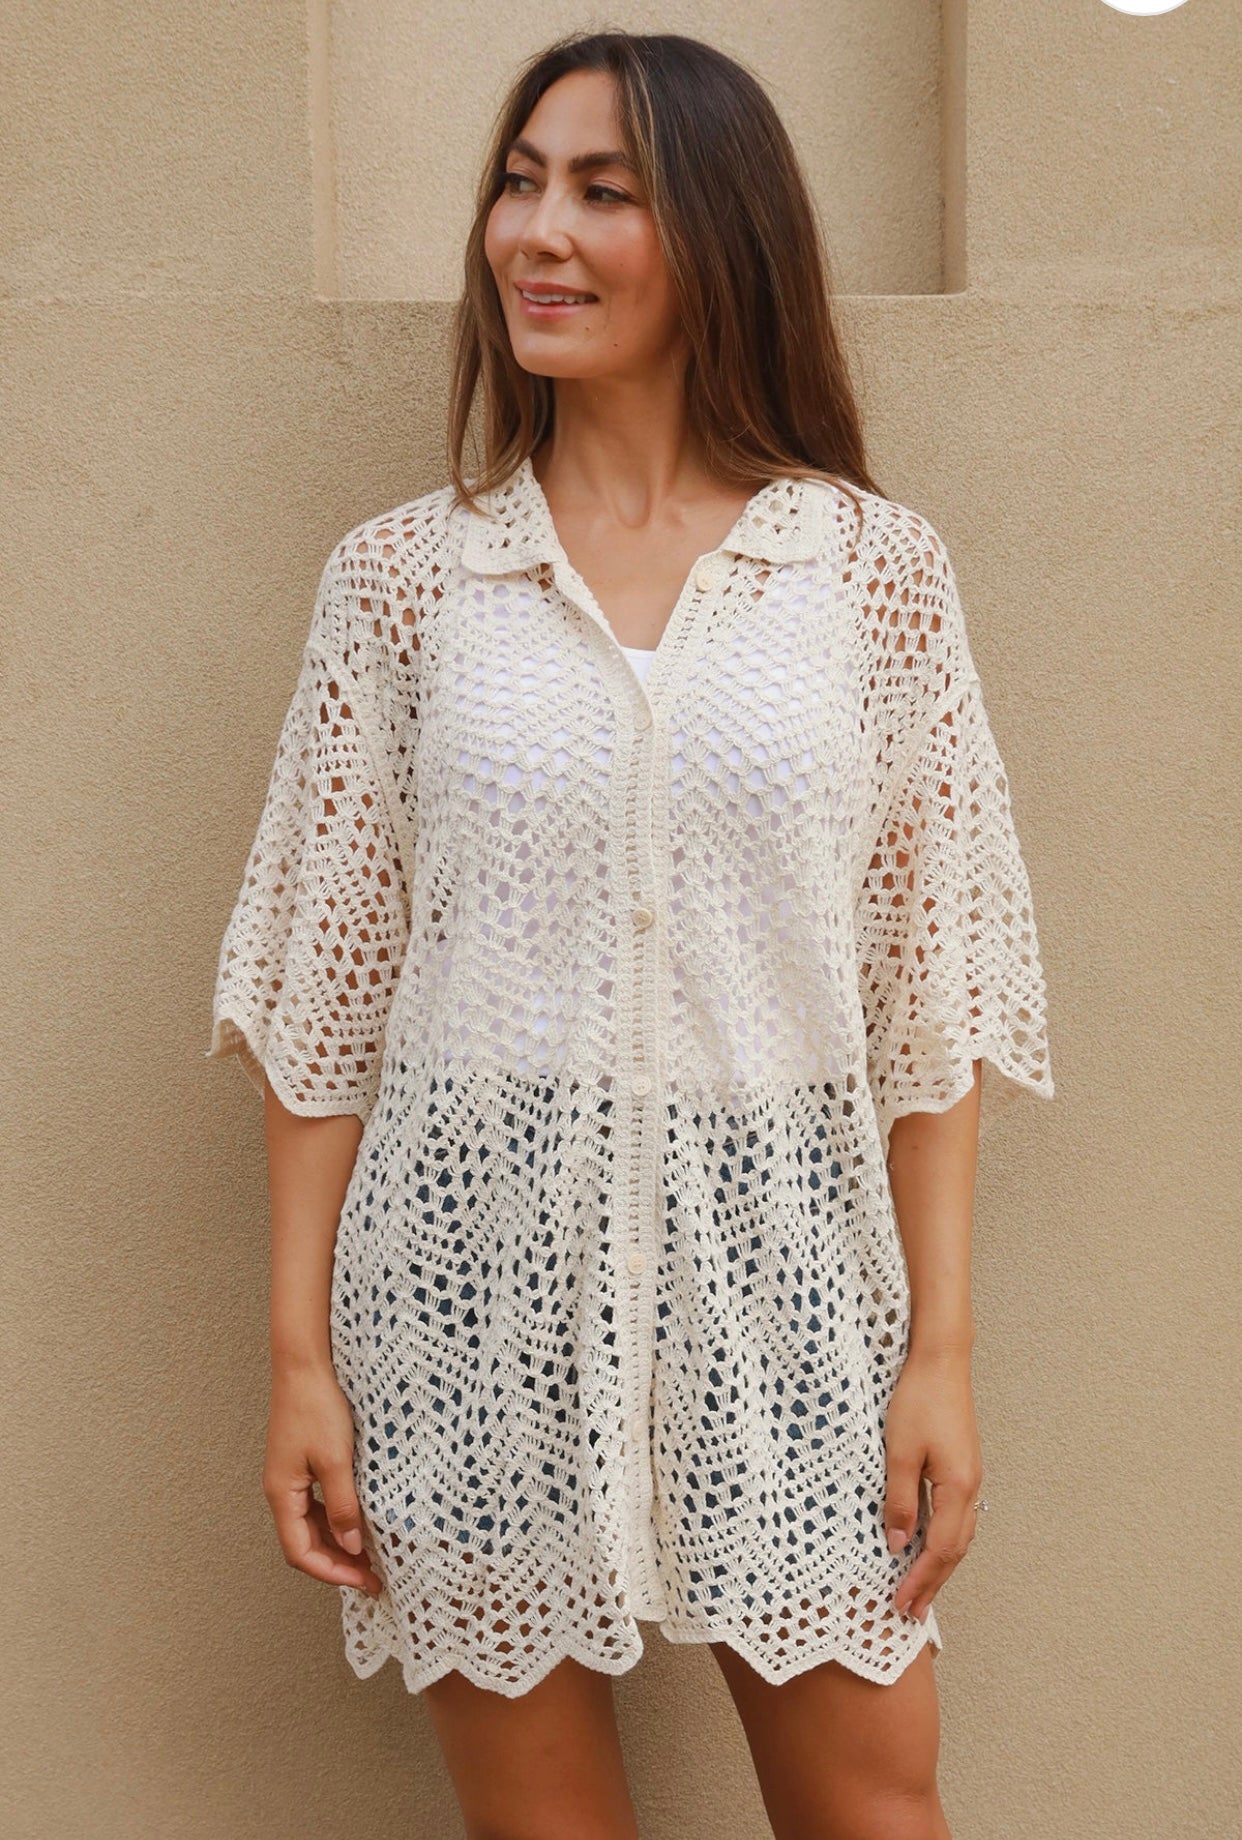 Lilly Design Button Shirt Dress crochet lace cotton